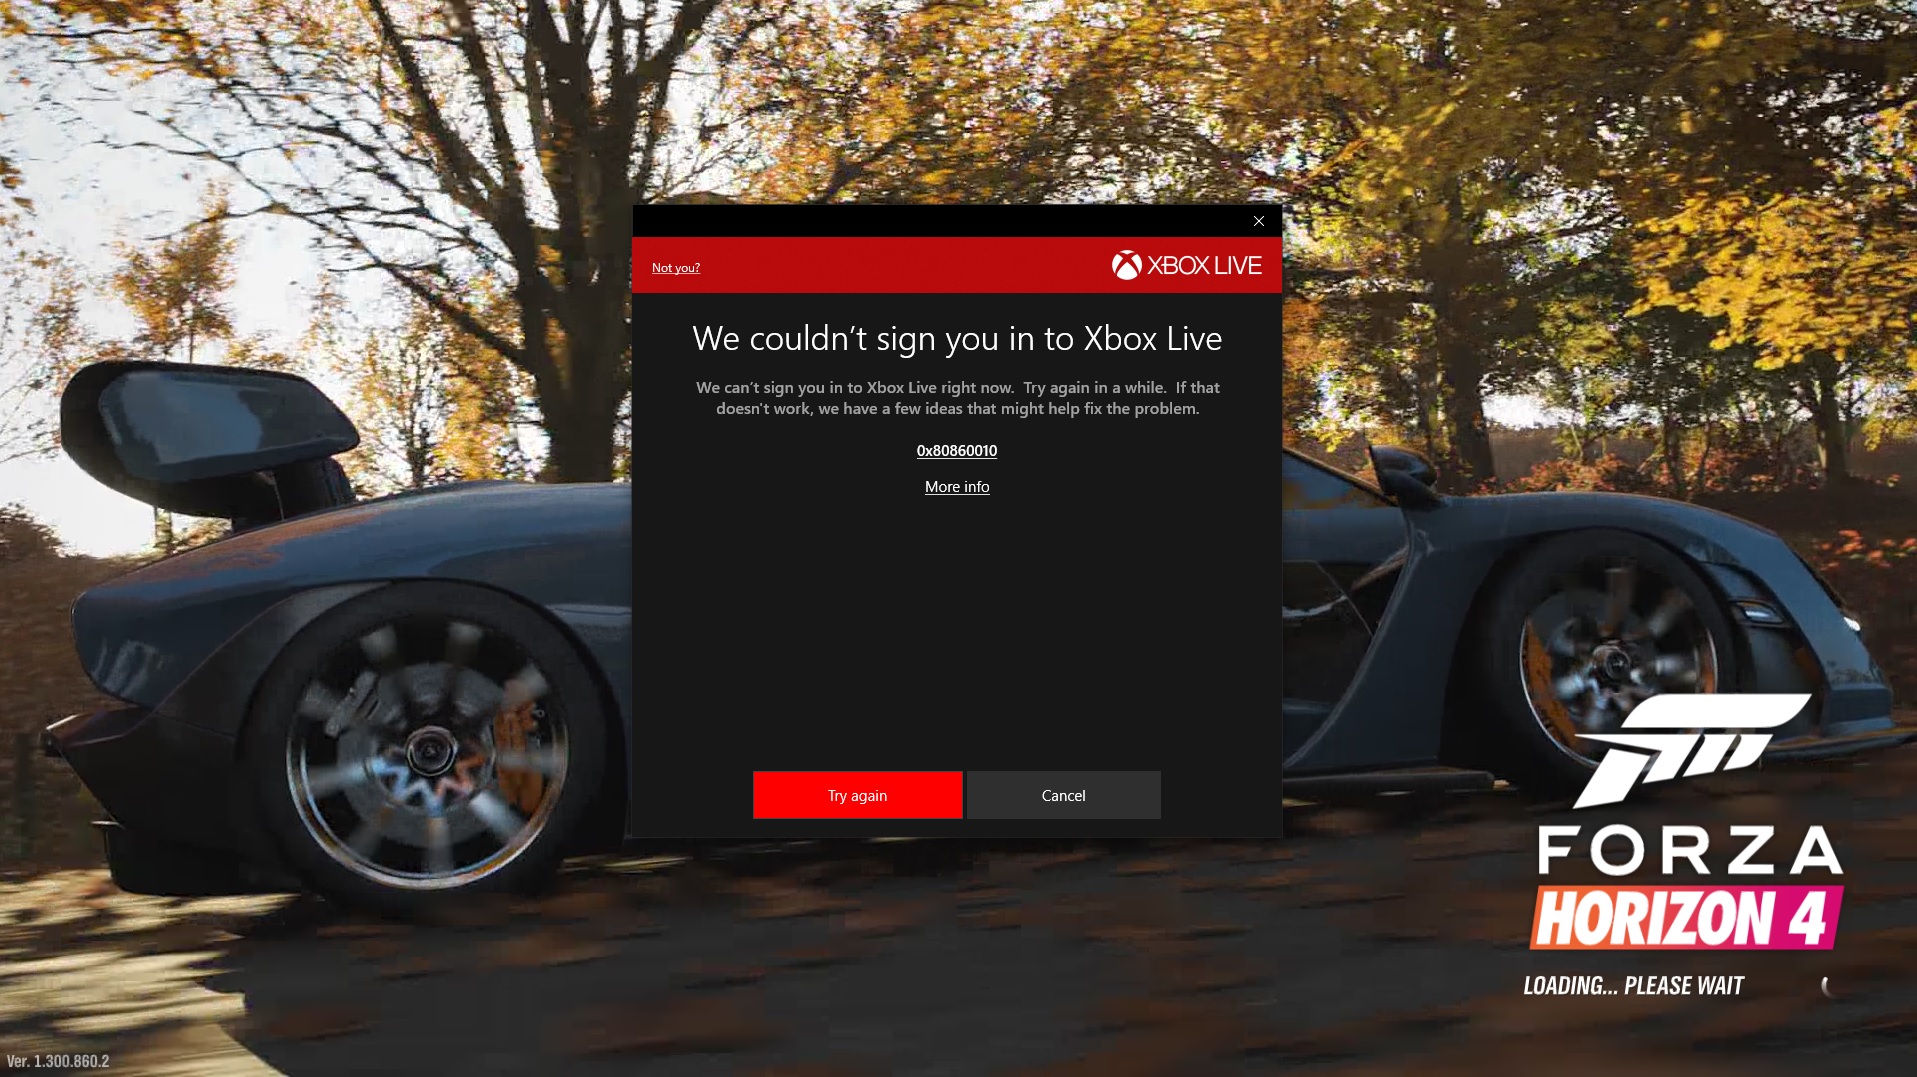 Cannot sign in Xbox Live/Forza Horizon 4 9f90faa4-067b-4ff0-bbde-3f24402eb3f6?upload=true.jpg